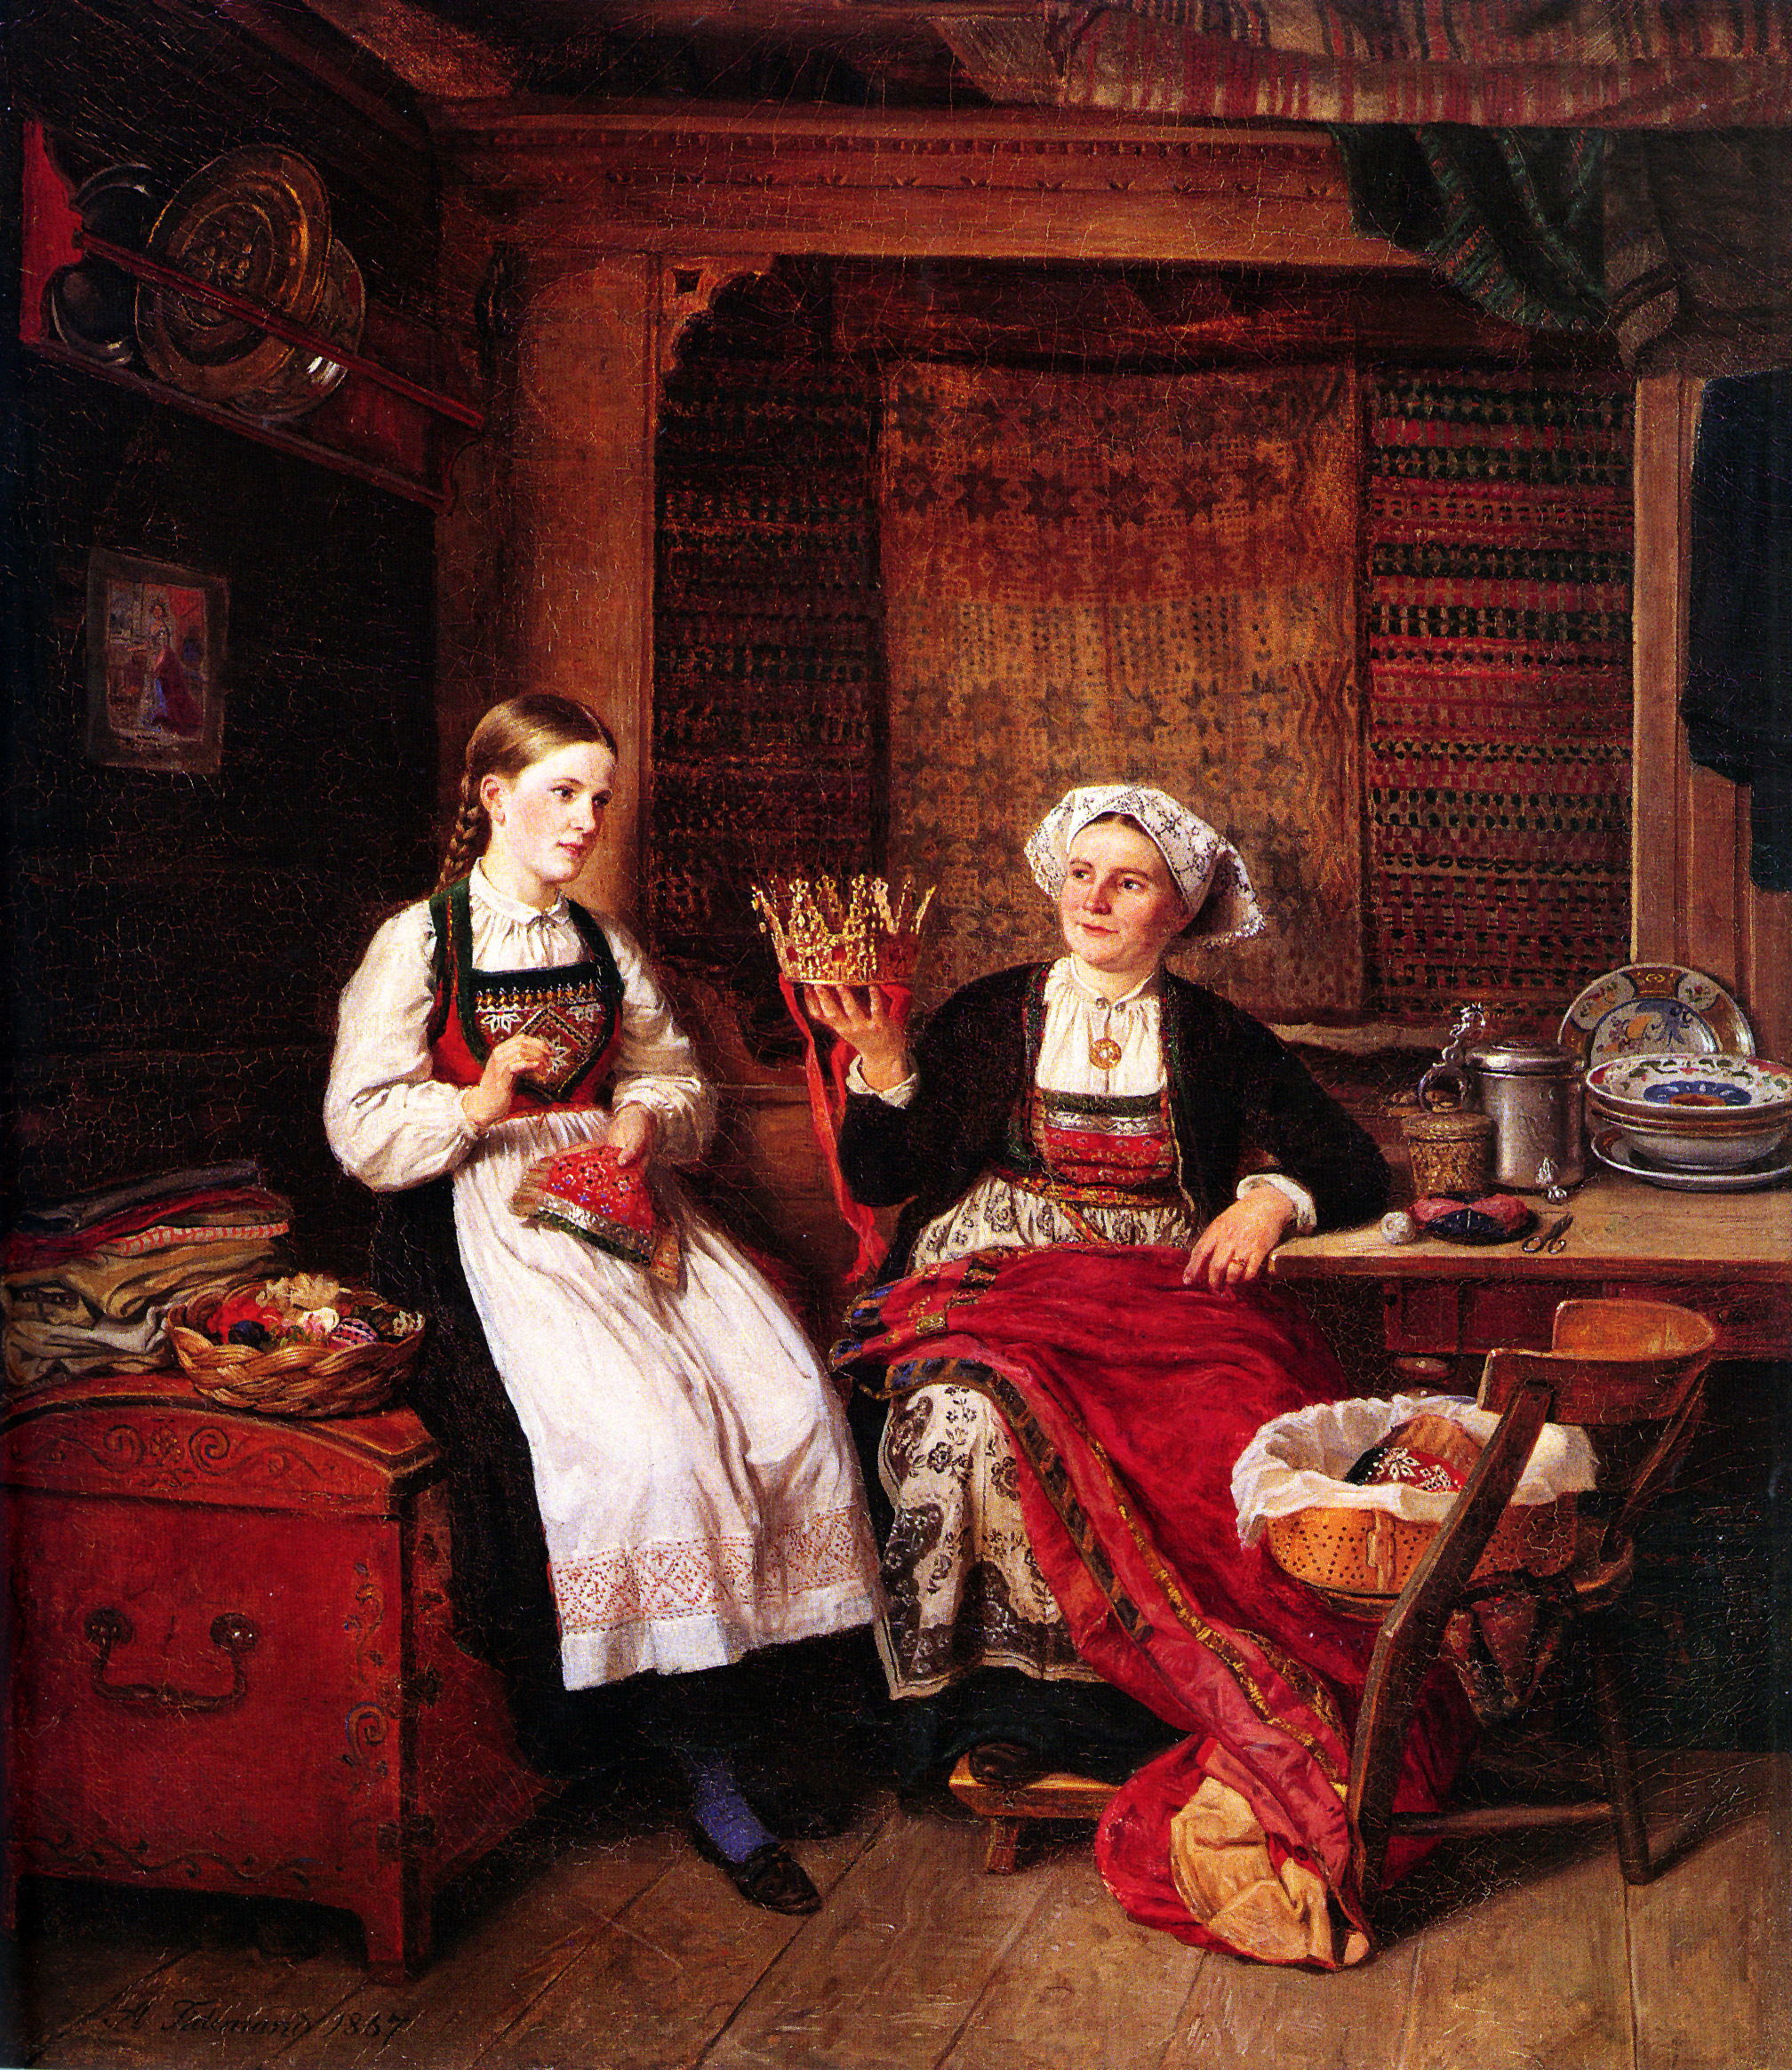 Bestemors Brudekrone by Adolph Tidemand